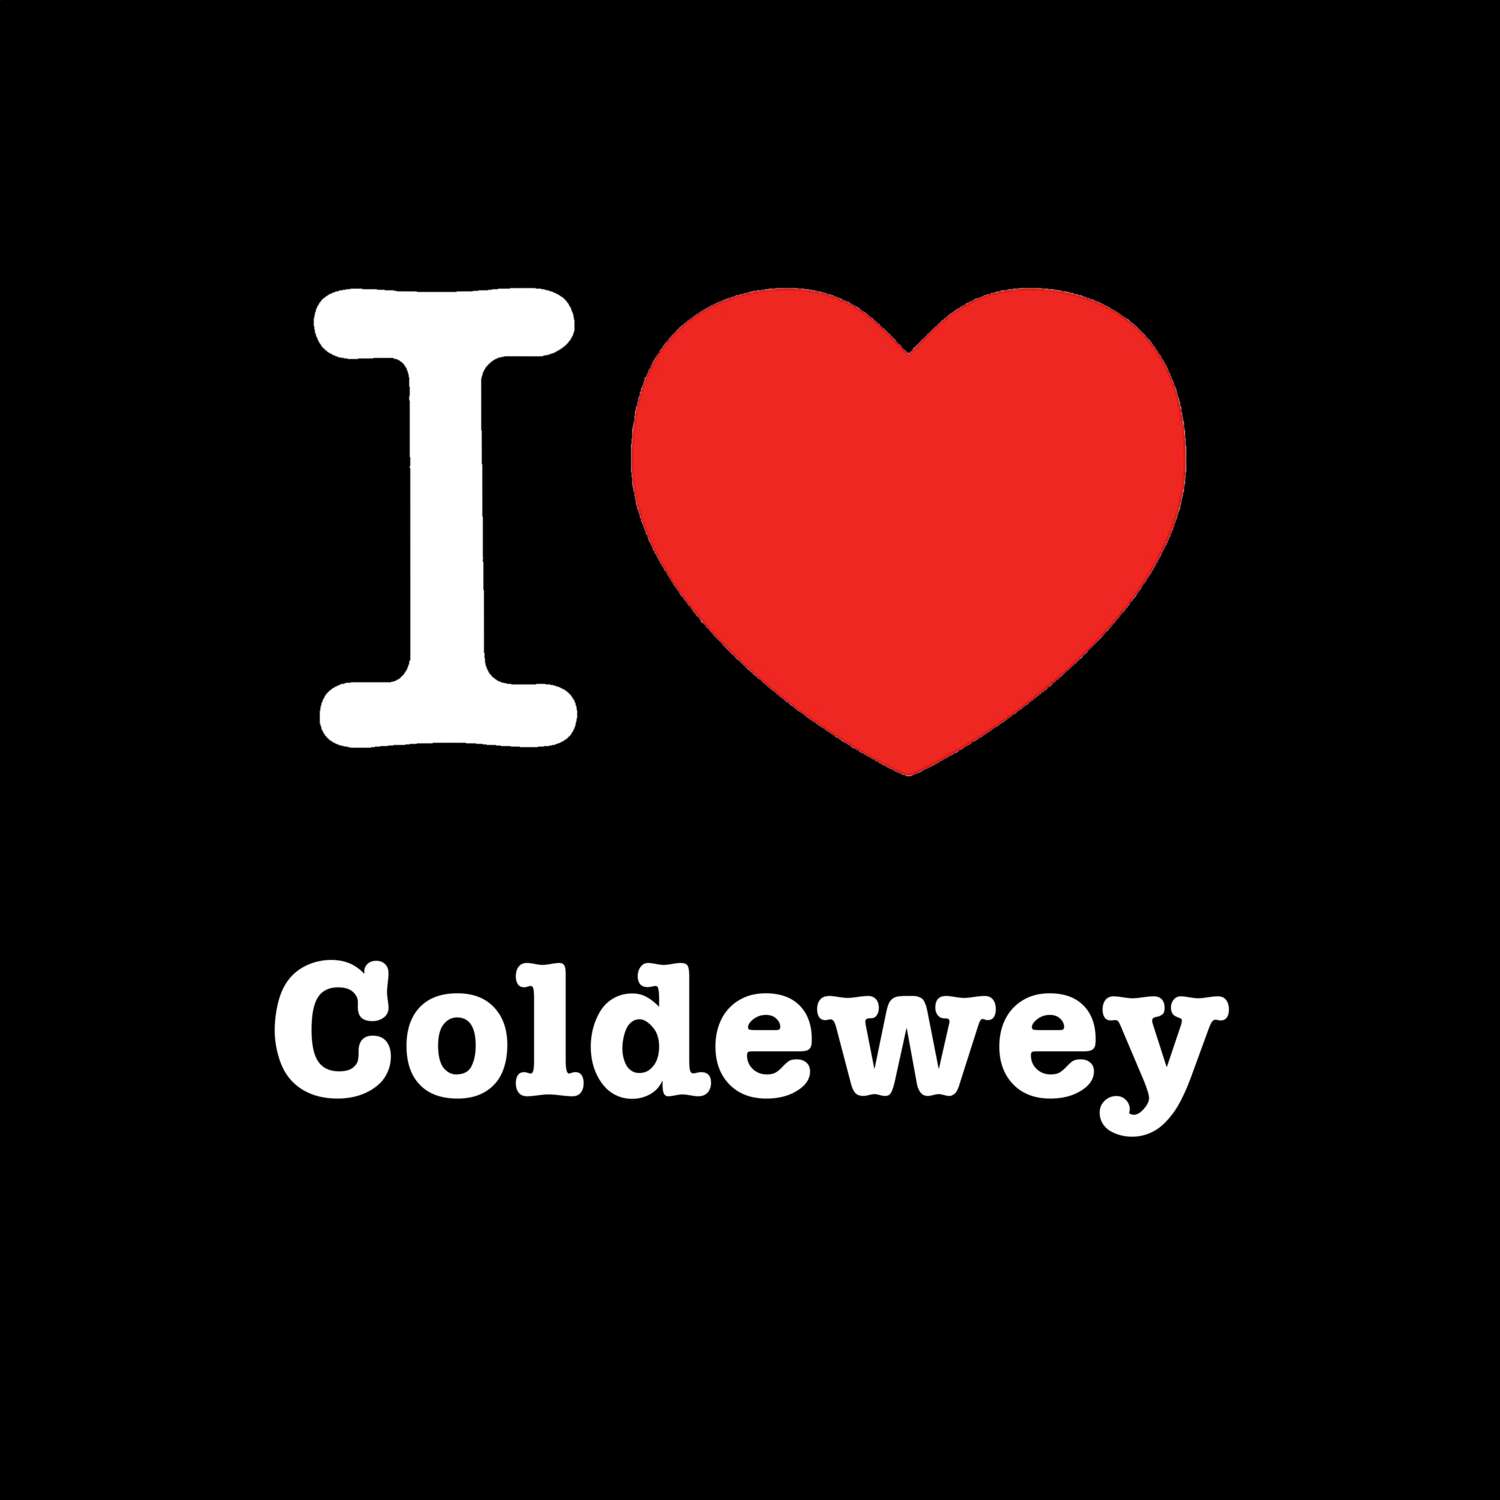 Coldewey T-Shirt »I love«